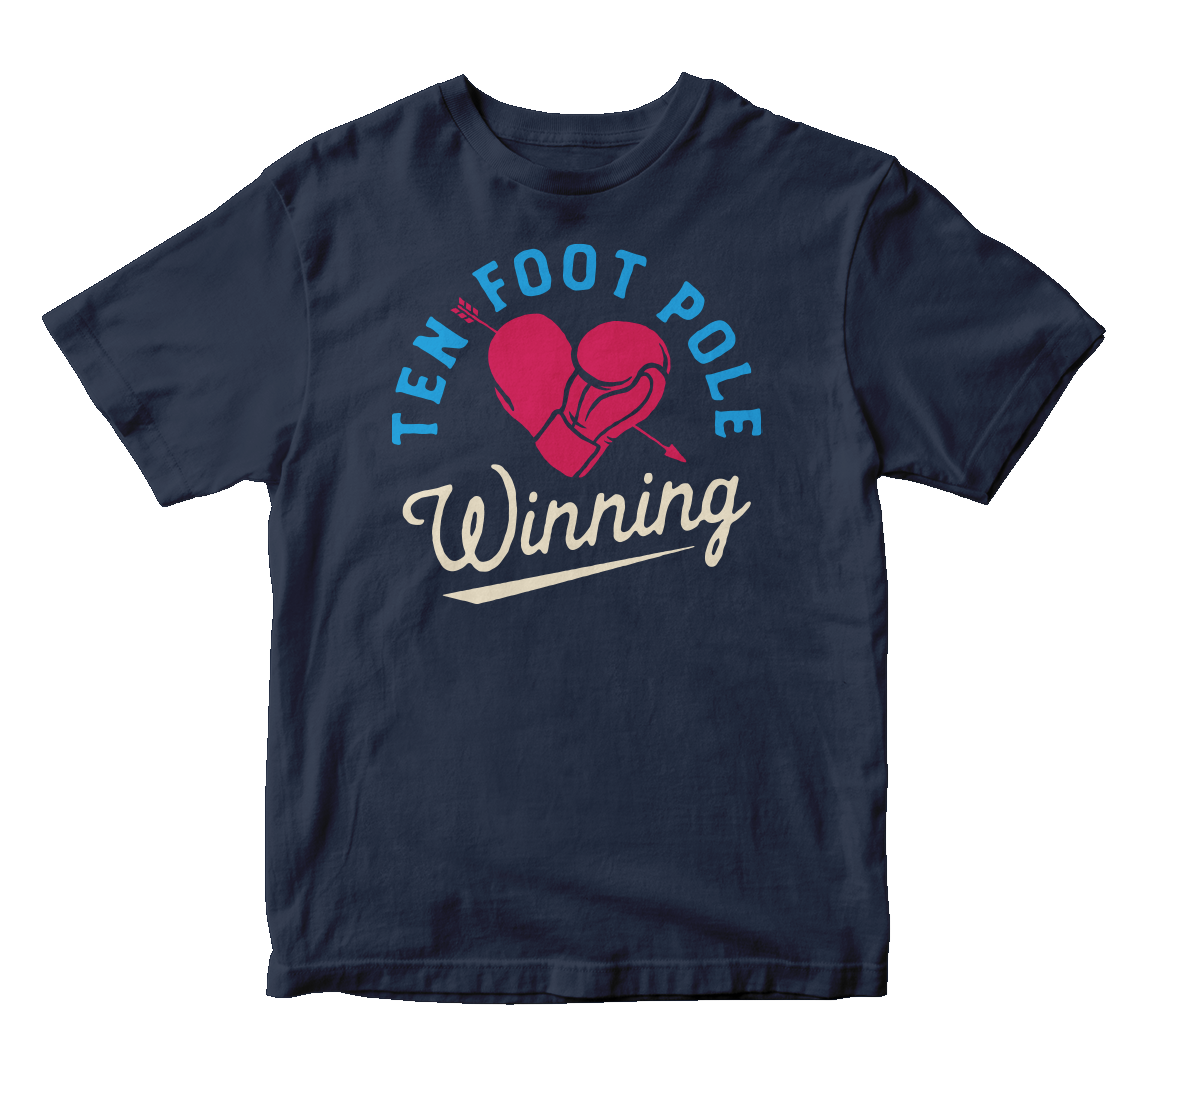 TEN FOOT POLE - "Winning Heart" (Navy) (Youth T-Shirt)